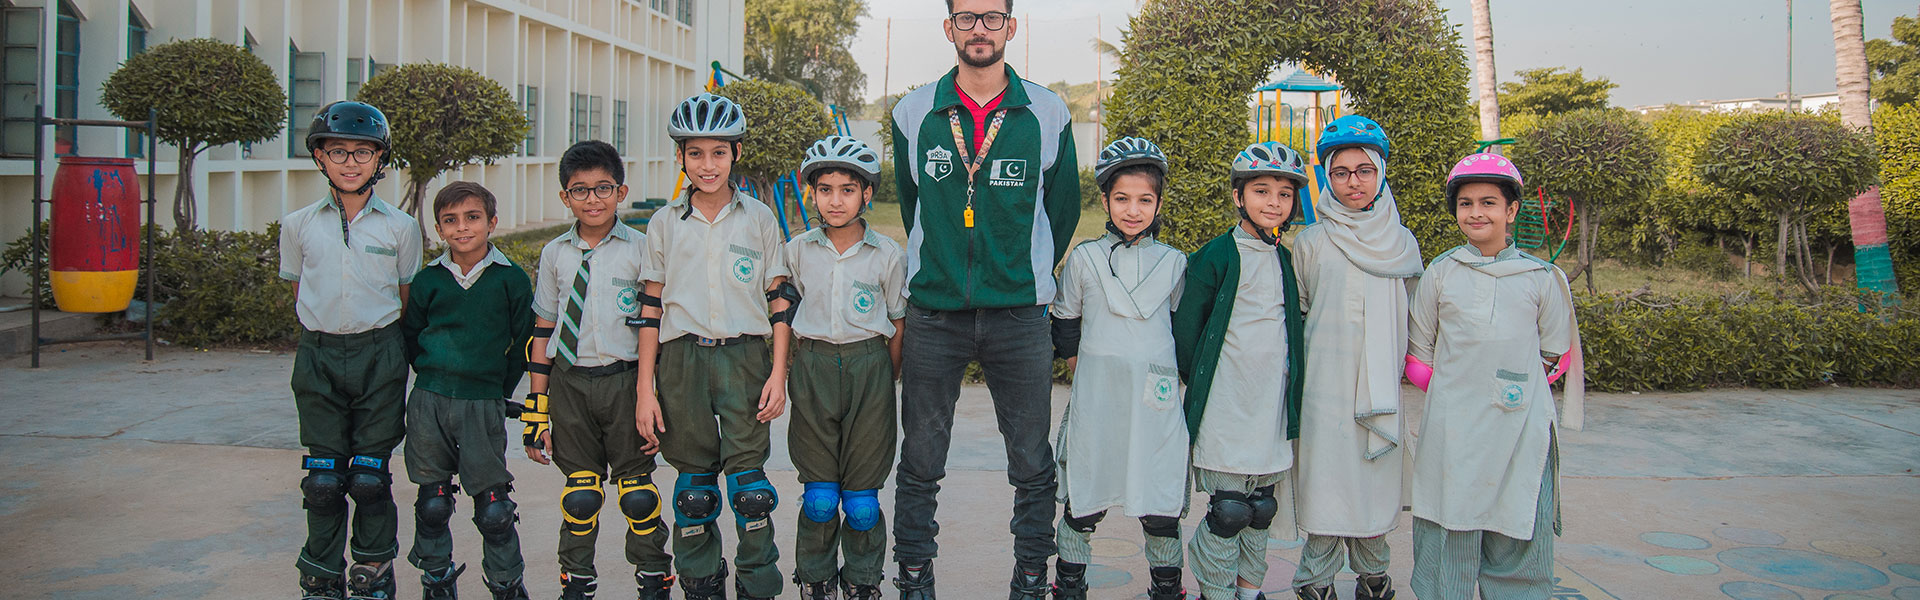 Pak School Uniform Xxx - The Aga Khan Schools in Pakistan - Aga Khan Schools